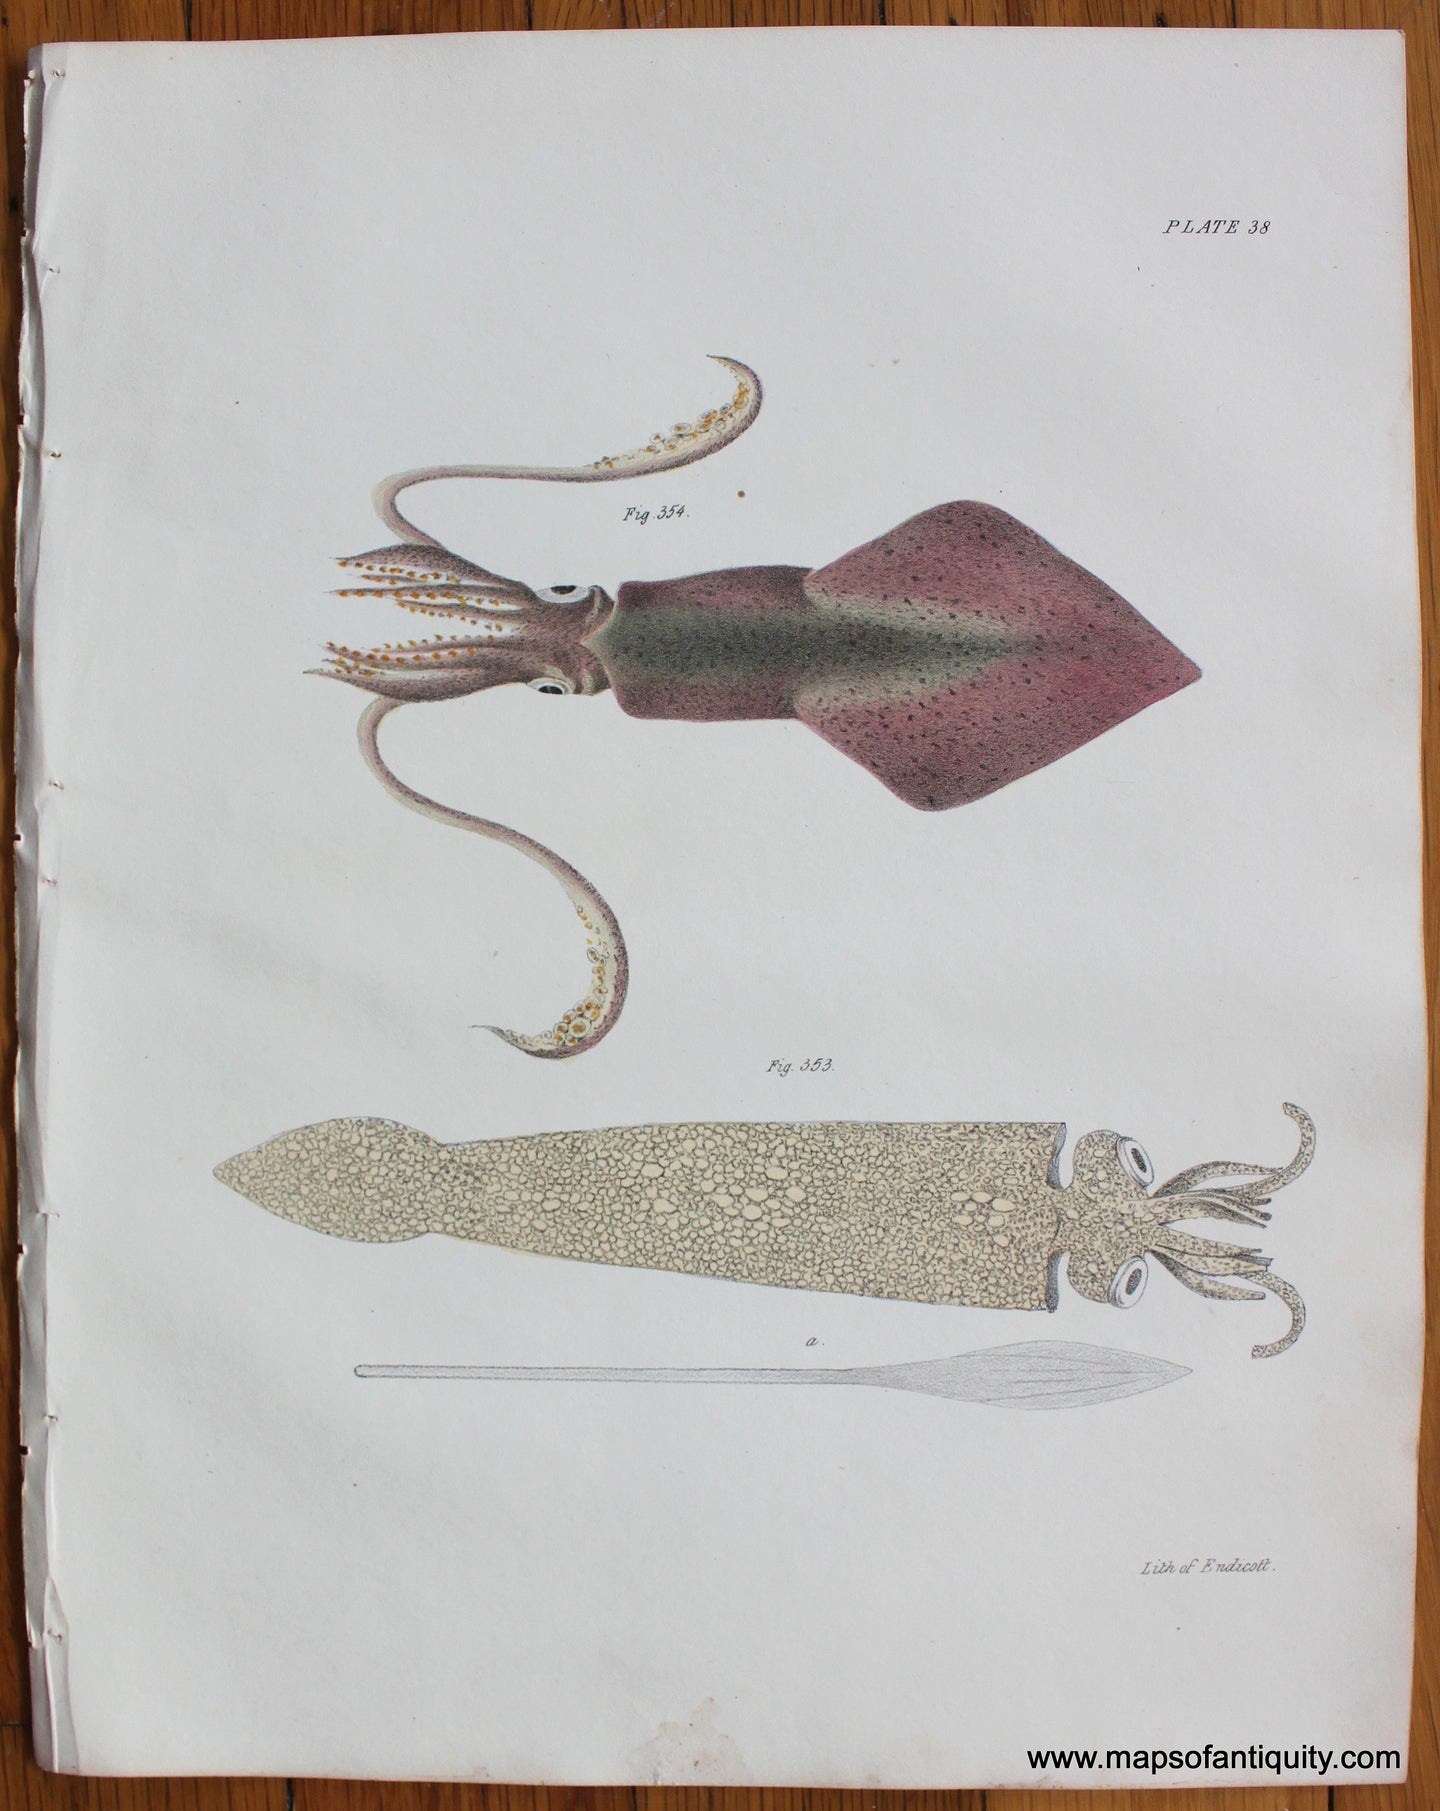 Antique-Lithograph-Antique-Squid-Print-1840s-Endicott-Fish-1800s-19th-century-Maps-of-Antiquity